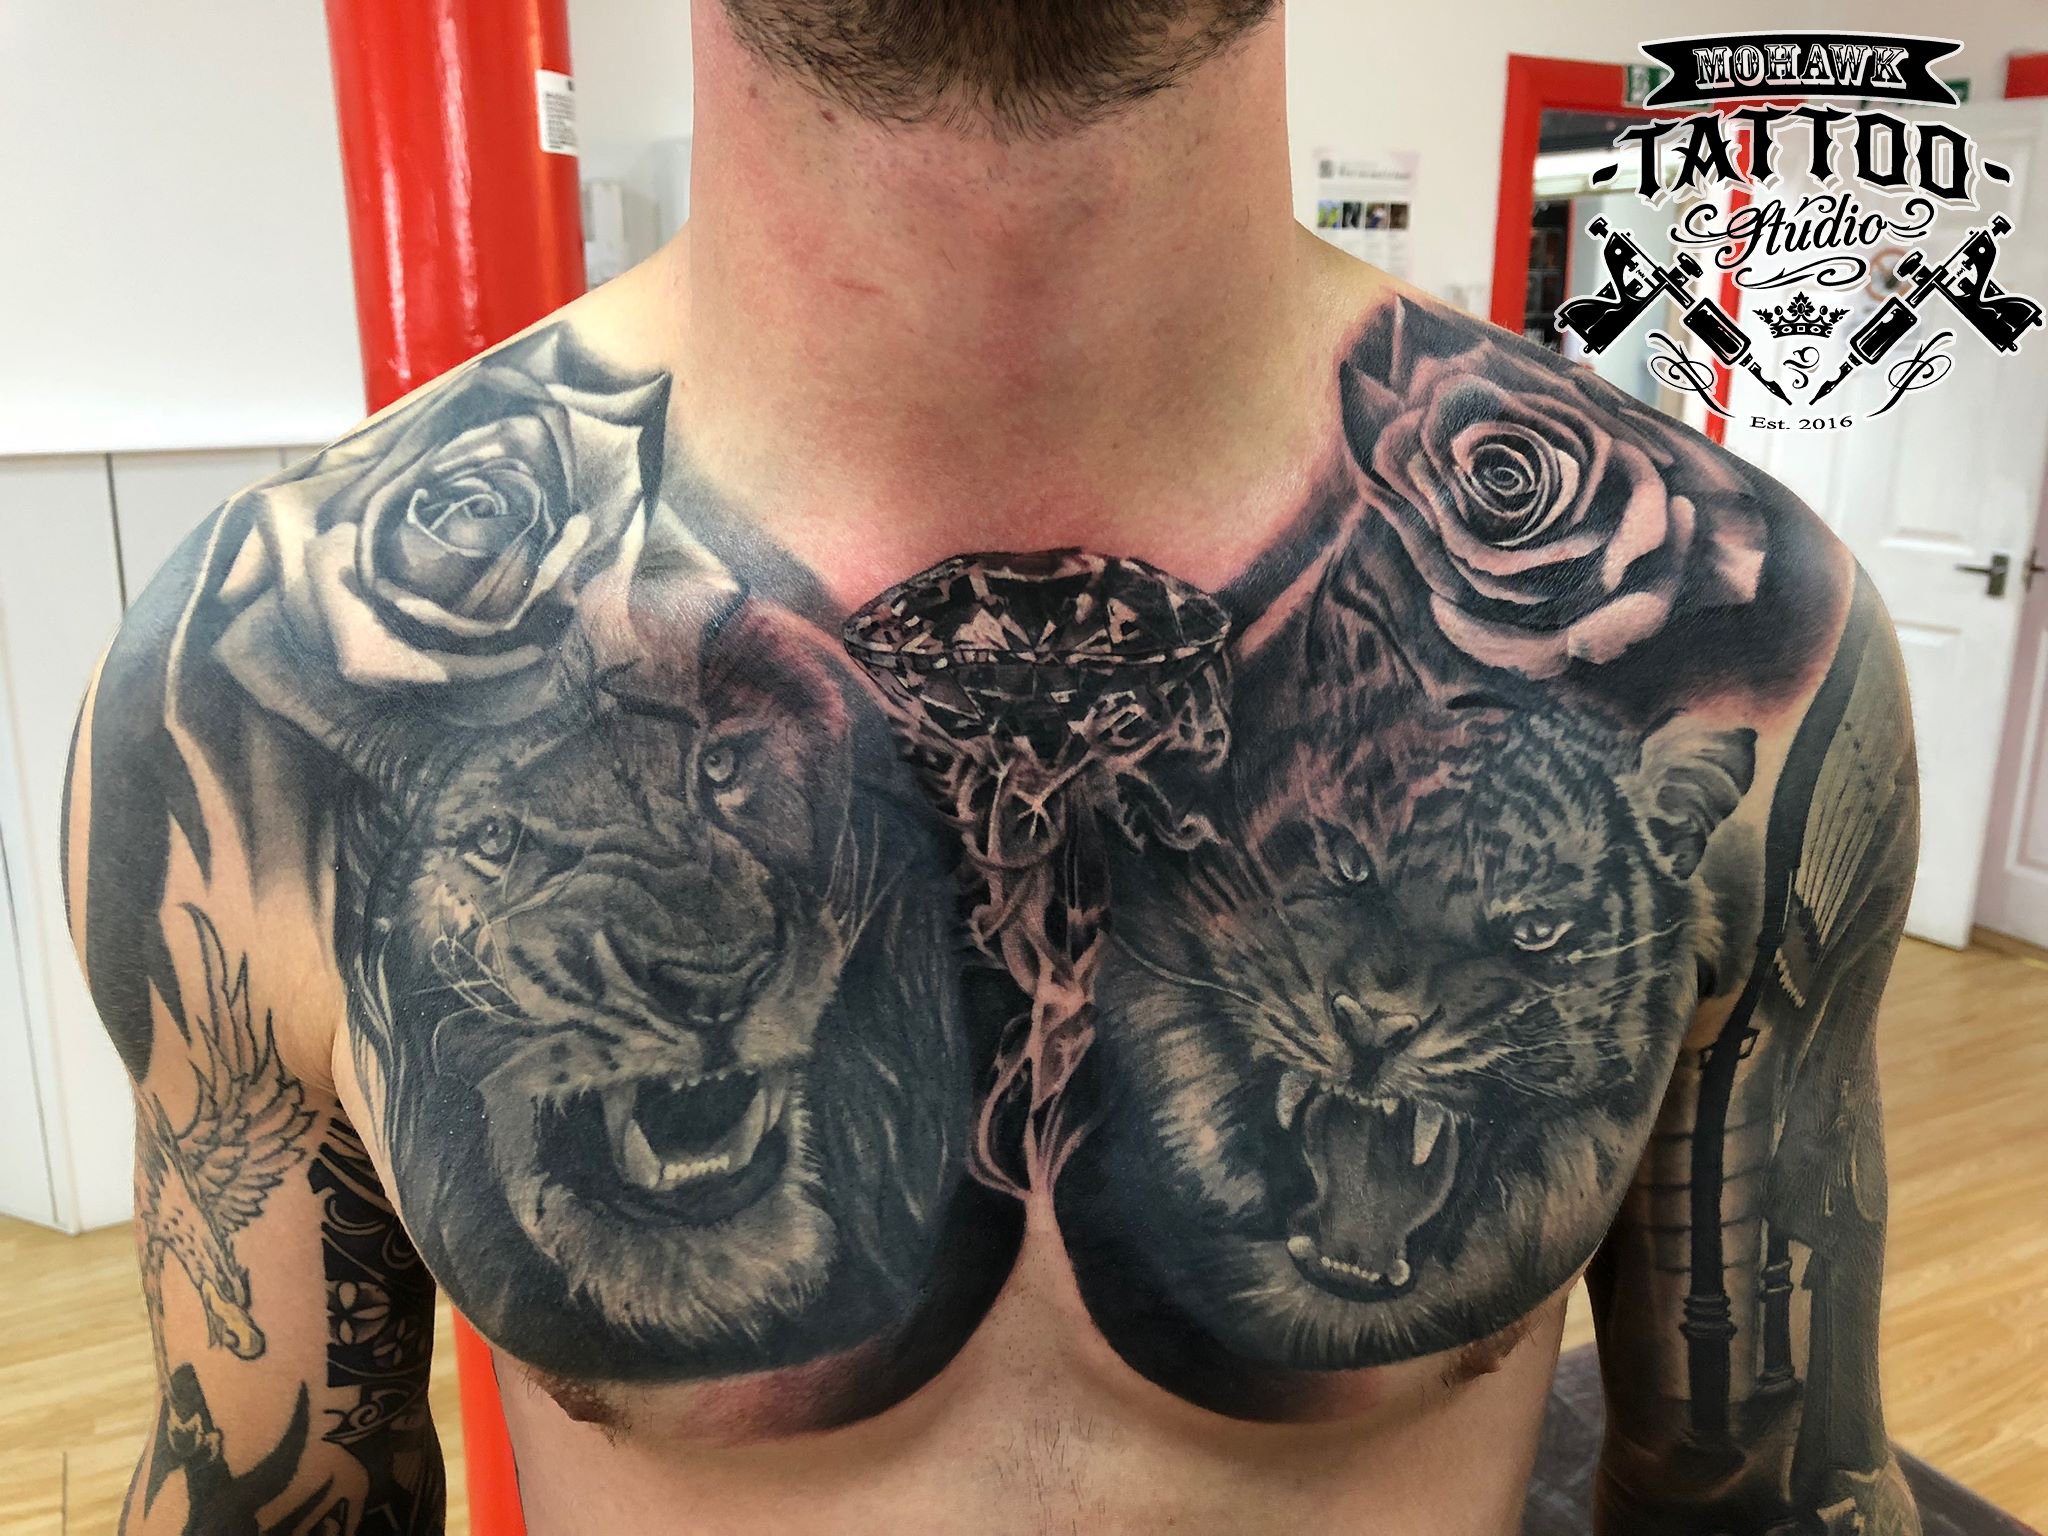 Gorilla chest tattoo  Mohawk Tattoo Studio  Facebook